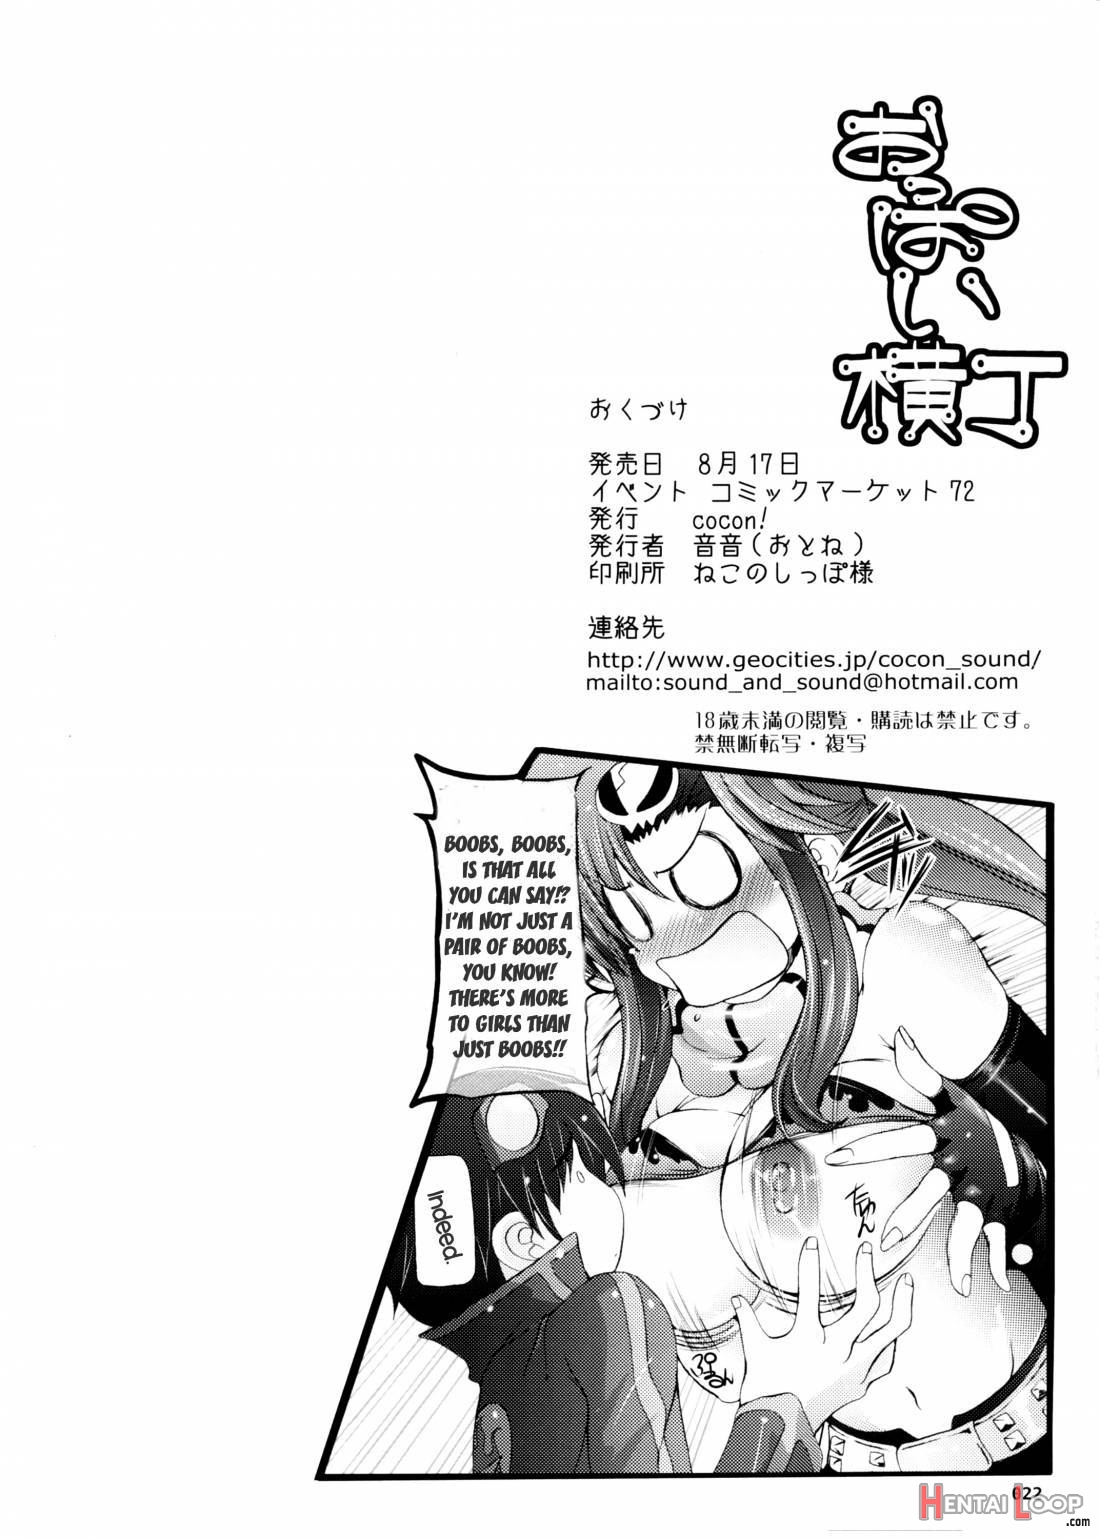 Oppai Yokochou page 19